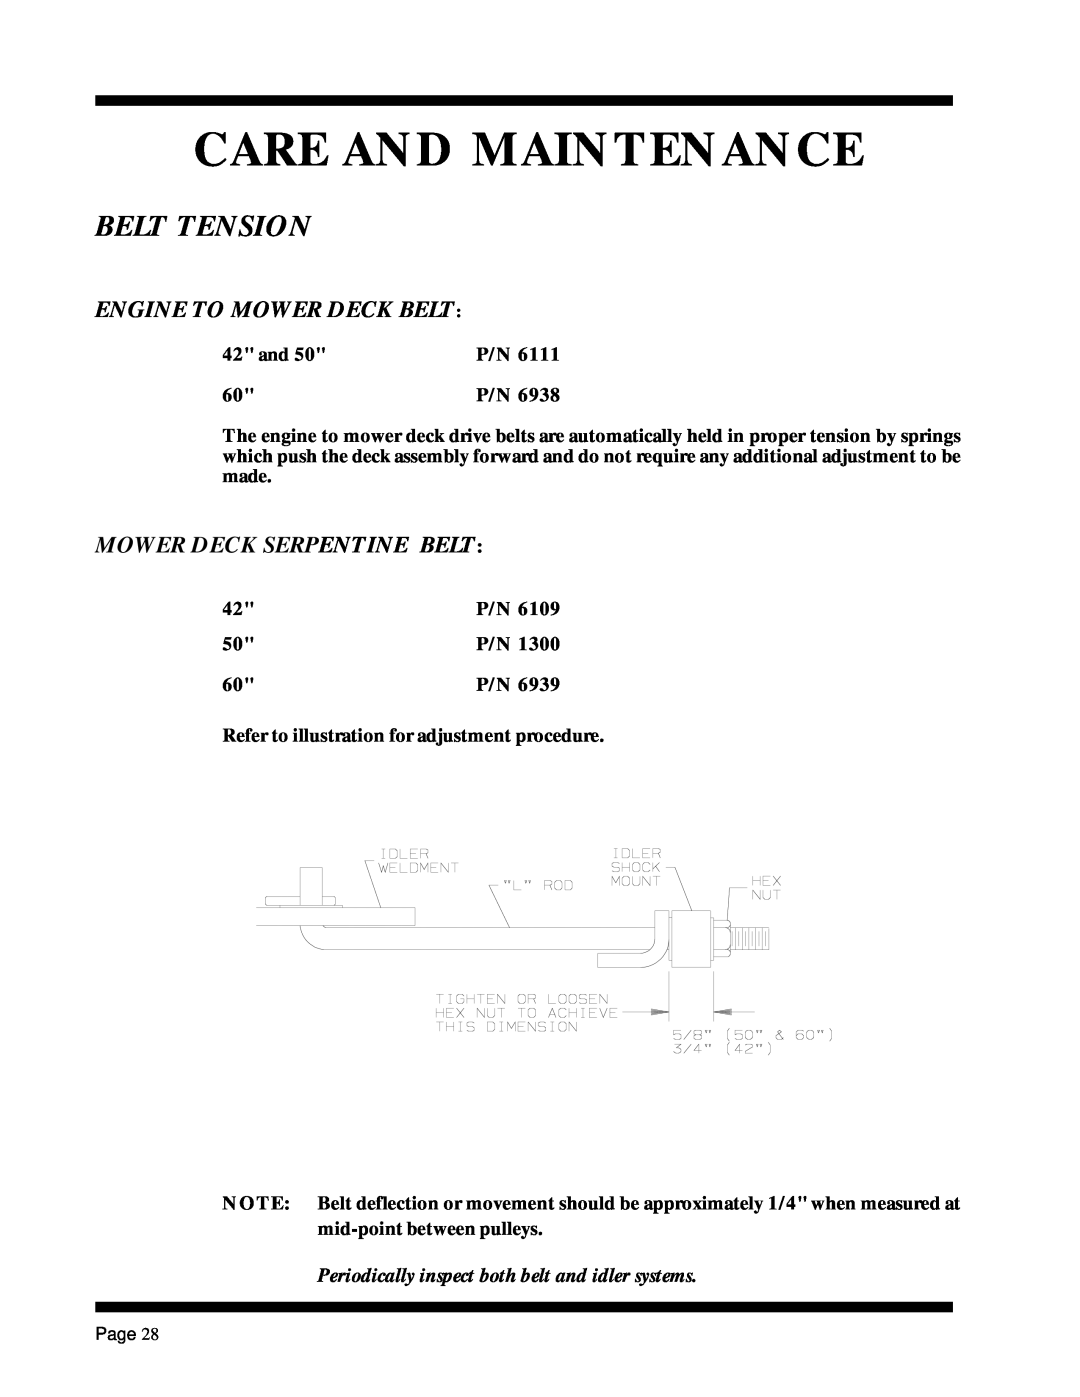 Dixon ZTR 5017Twin manual Belt Tension, Engine To Mower Deck Belt, Mowerrear Deck Serpentine Belt, Care And Maintenance 